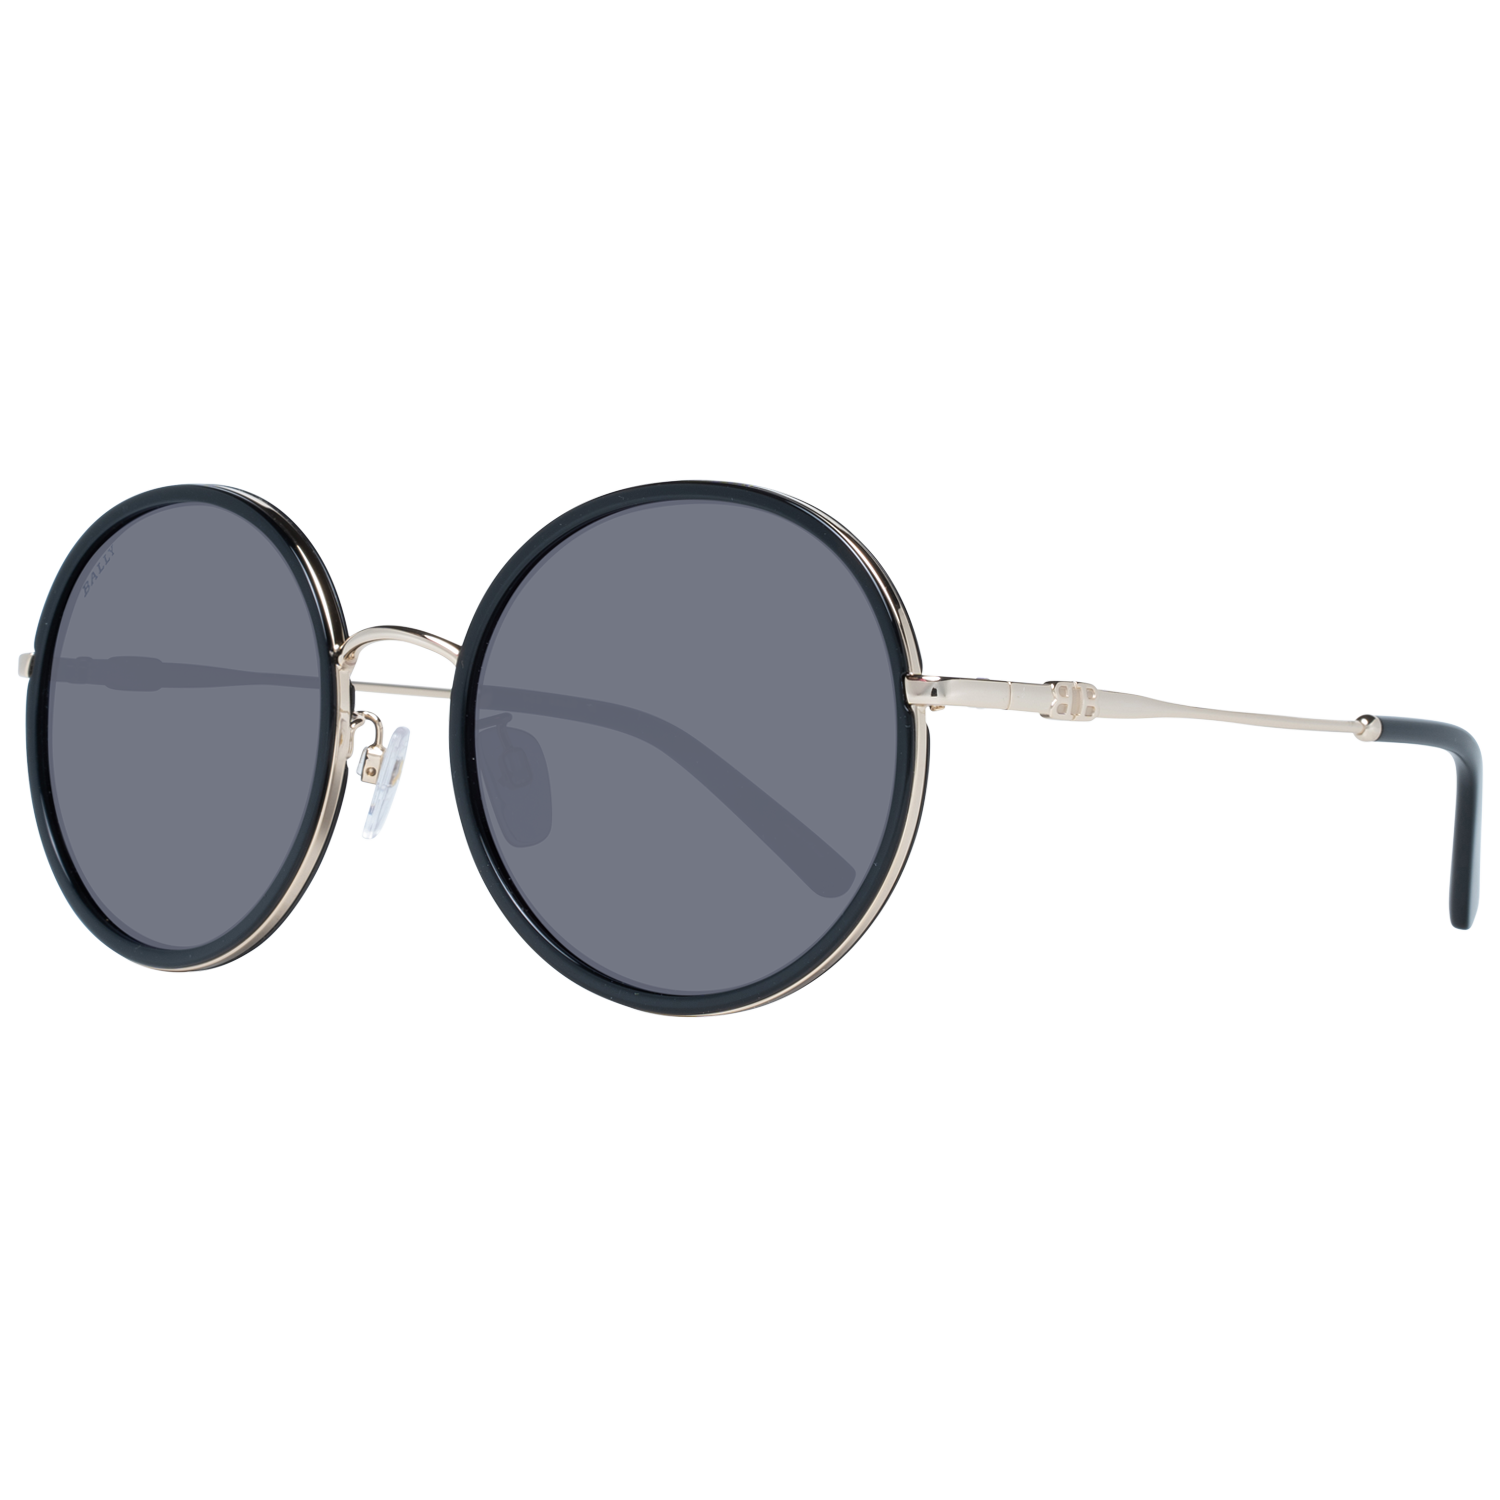 Bally Sunglasses Bally Sunglasses BY0052-K 01A 59 Eyeglasses Eyewear UK USA Australia 